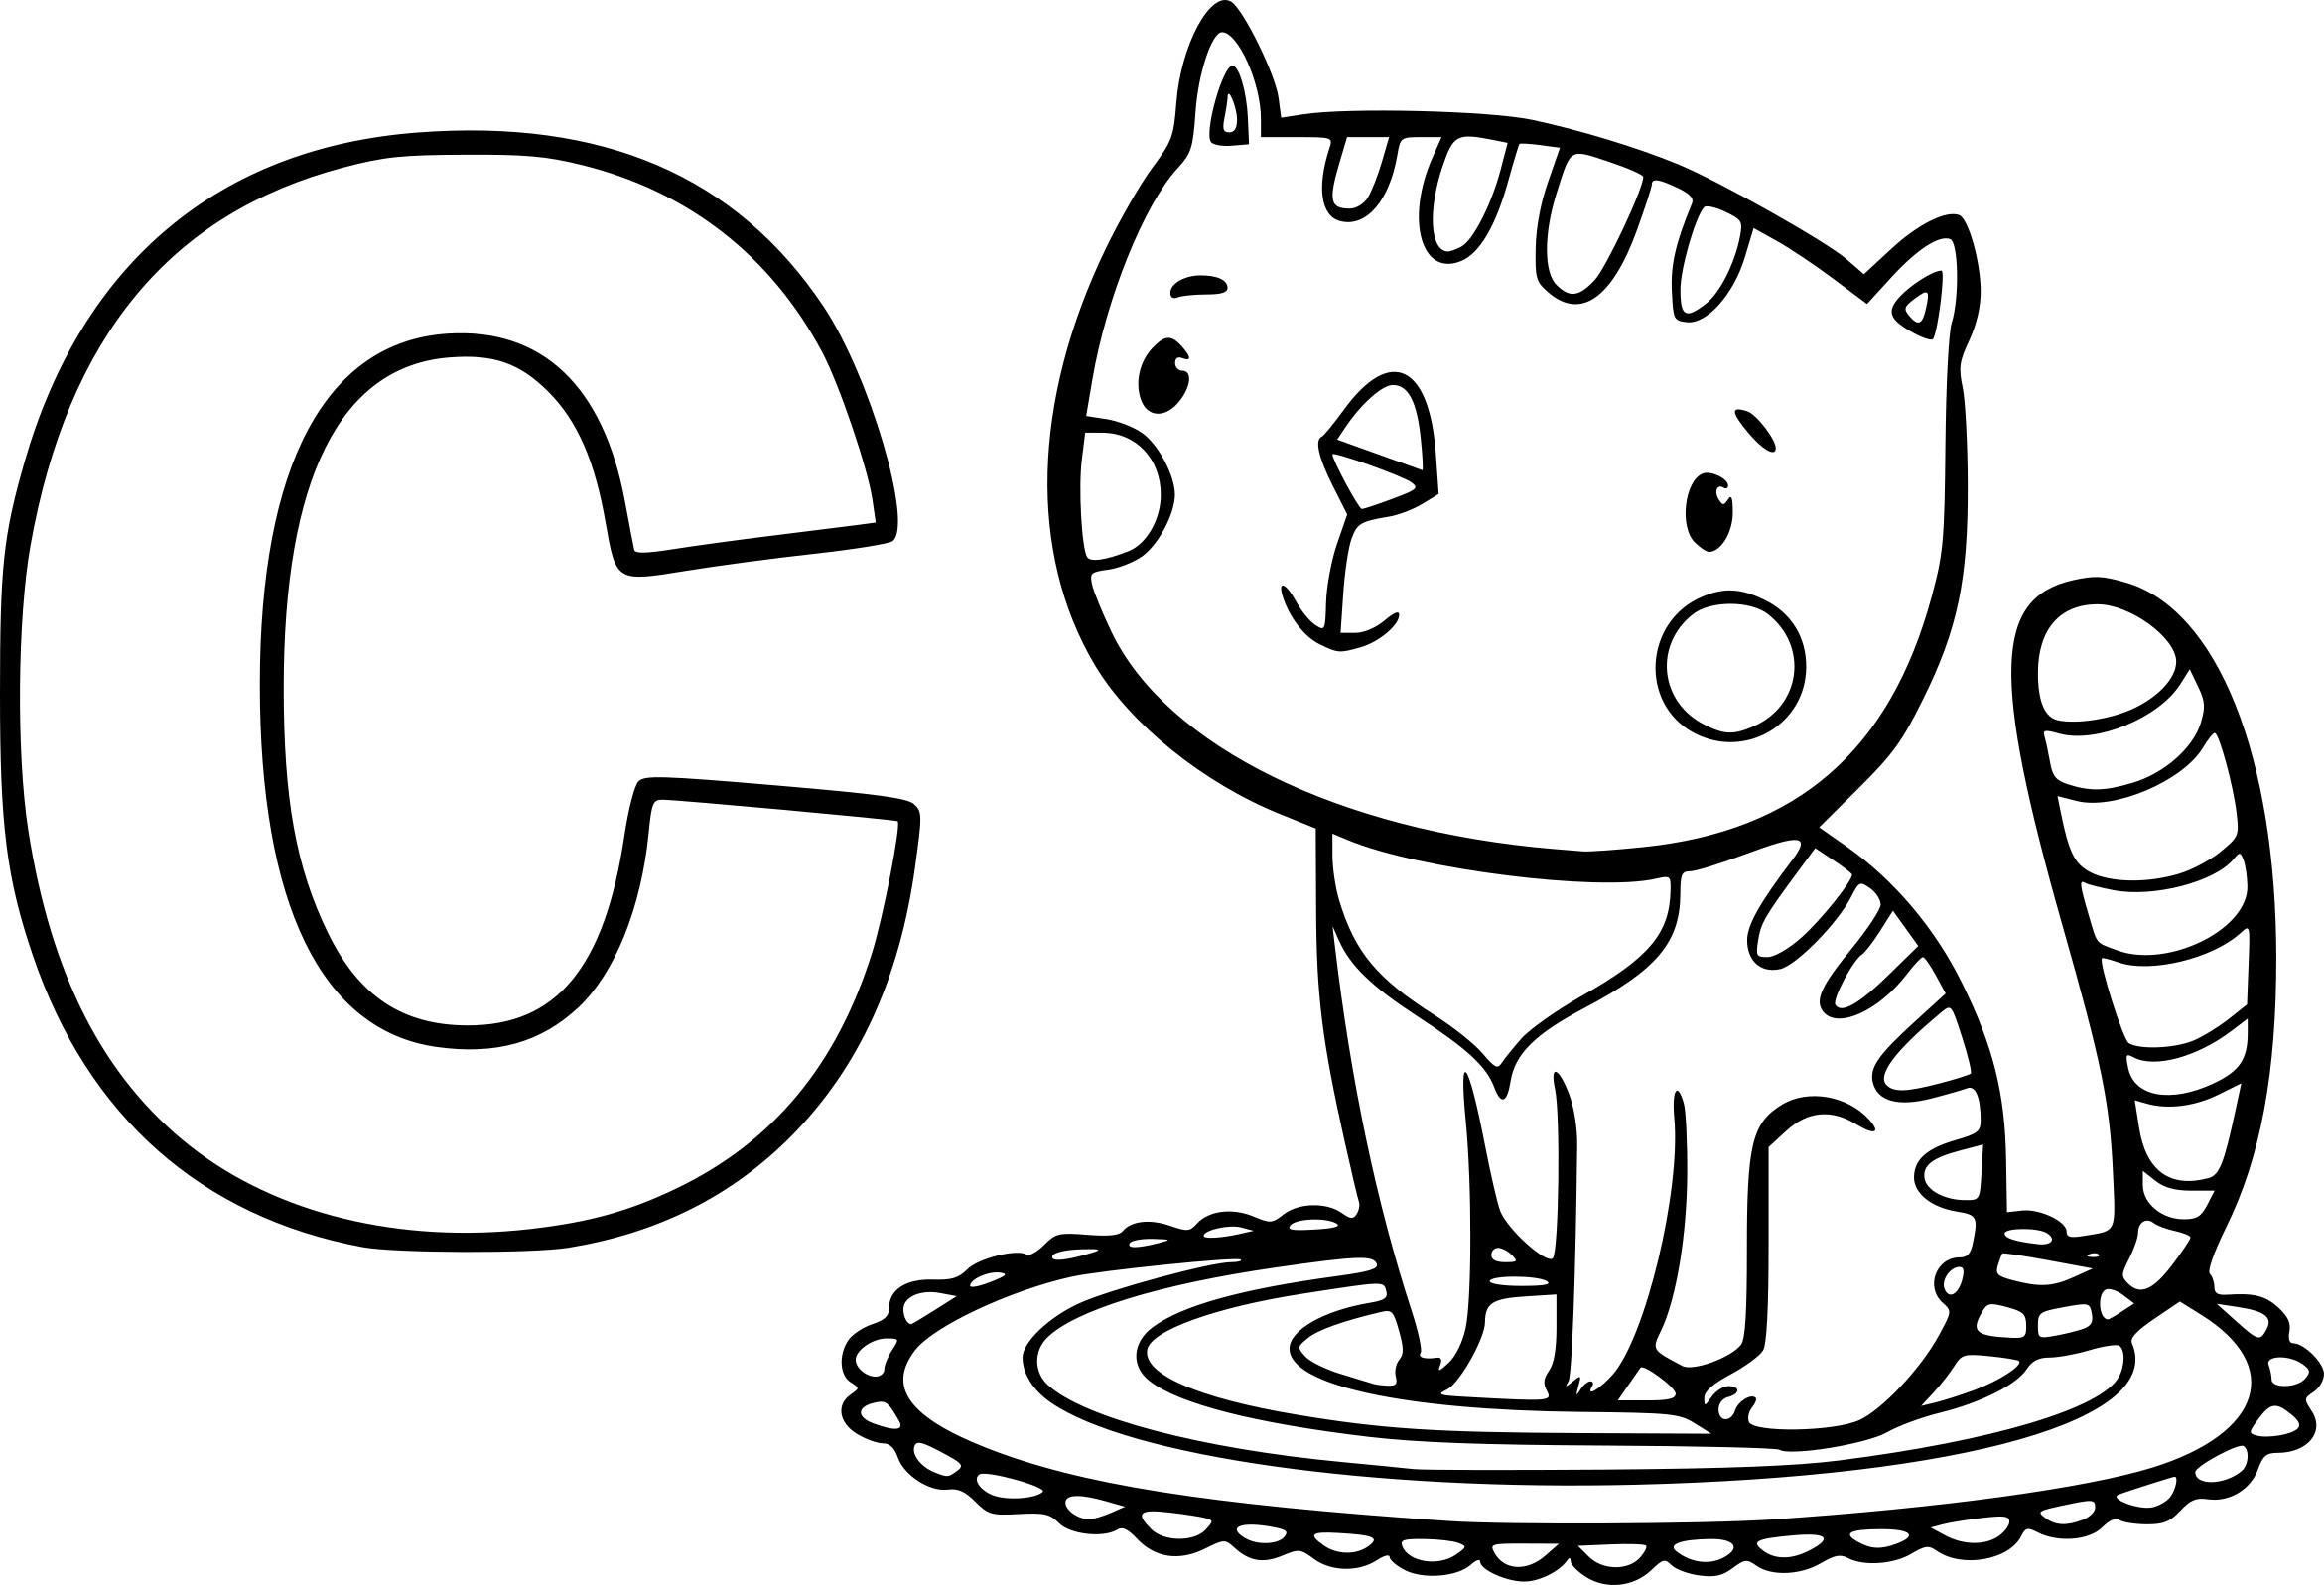 Coloriage C comme chat